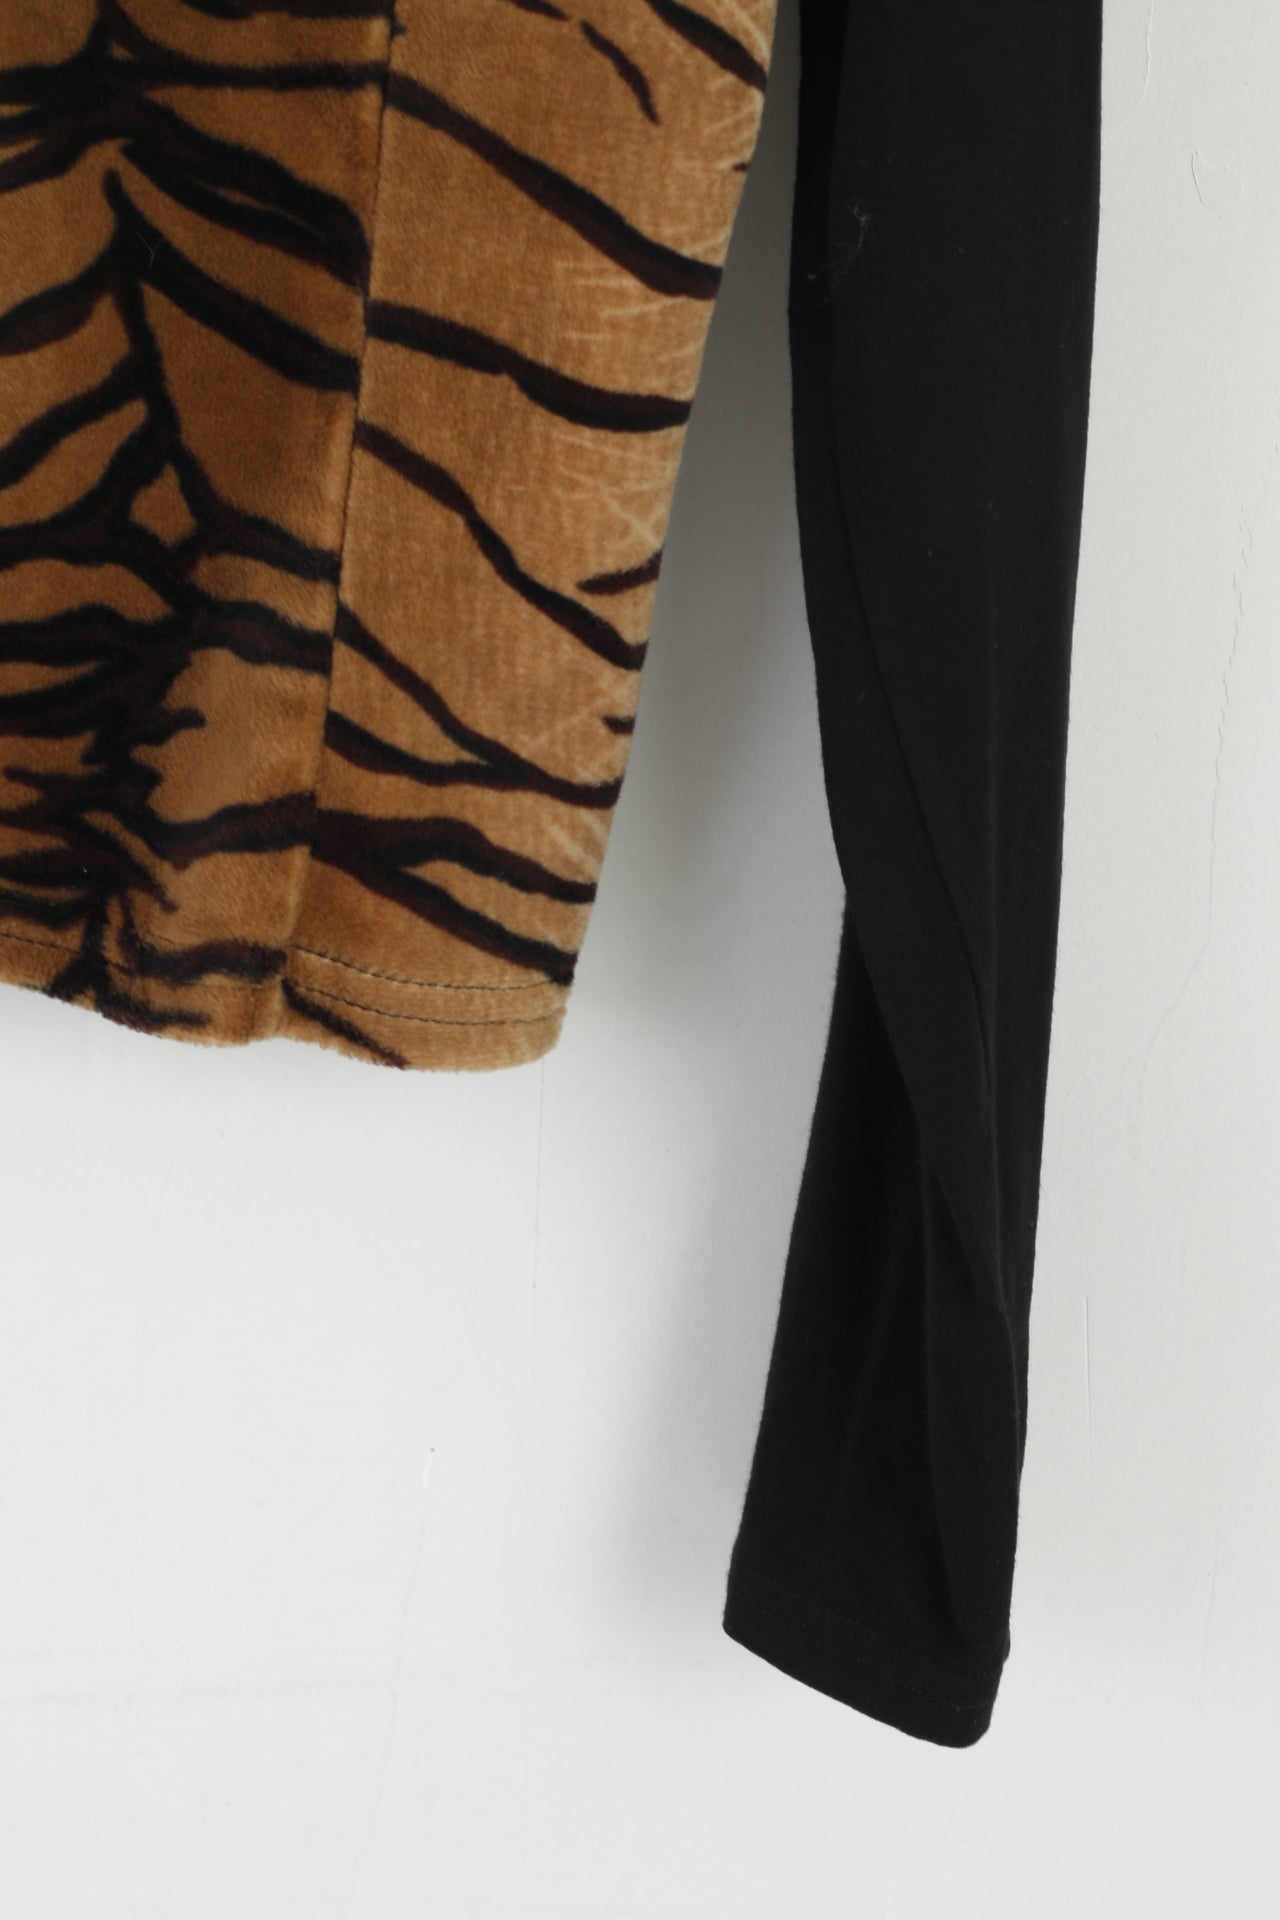 Modelli Paris Women S Shirt Brown Long Sleeve Gijebard Cheetah Top